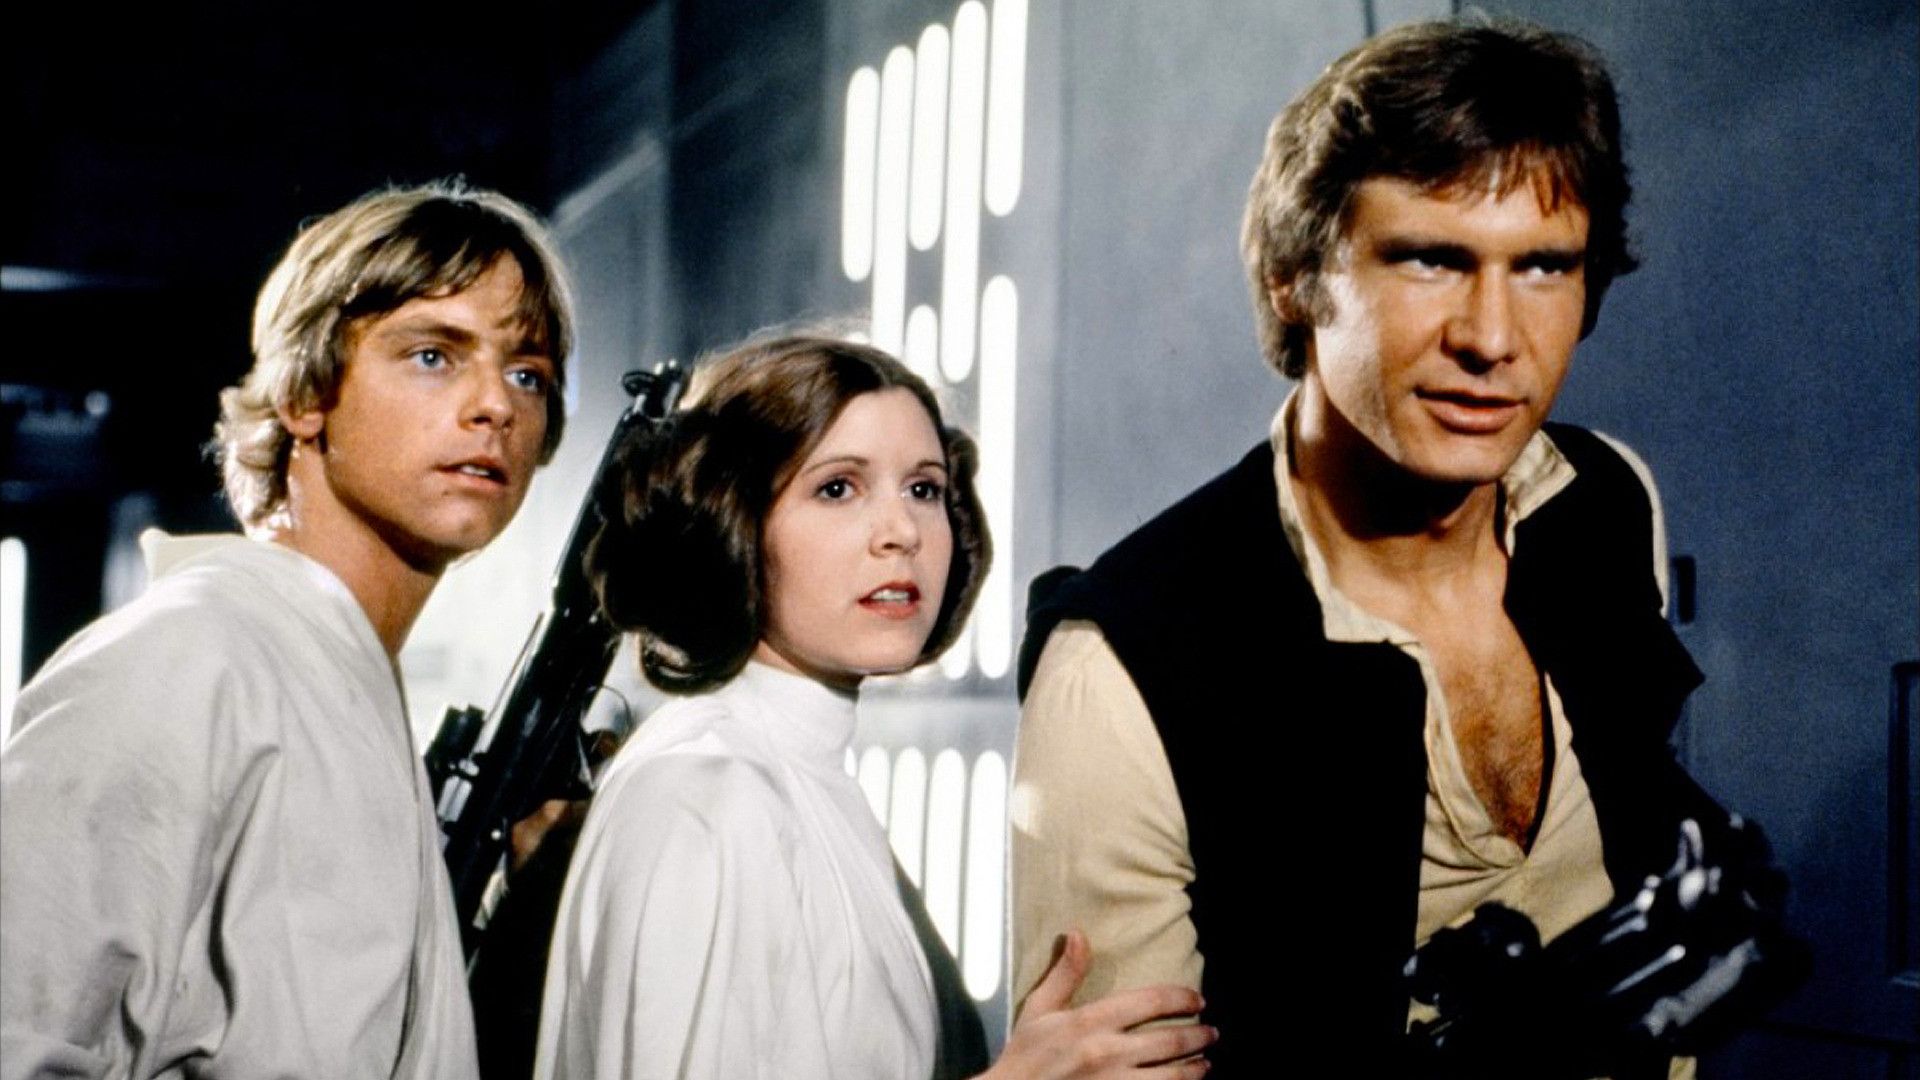 Luke, Leia and Han Solo in Star Wars IV: A New Hope